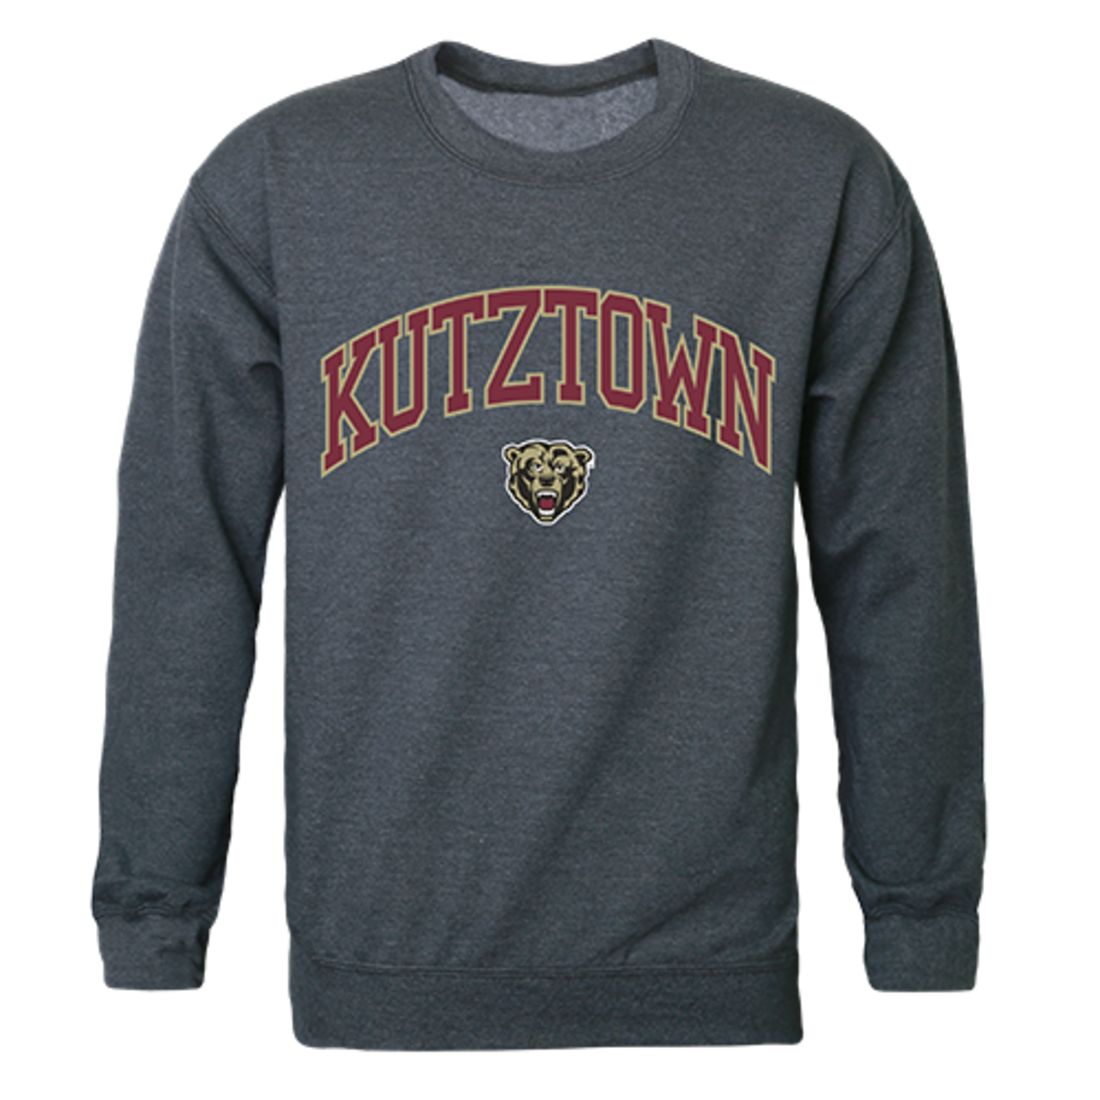 Kutztown University of Pennsylvania Campus Crewneck Pullover Sweatshirt Sweater Heather Charcoal-Campus-Wardrobe